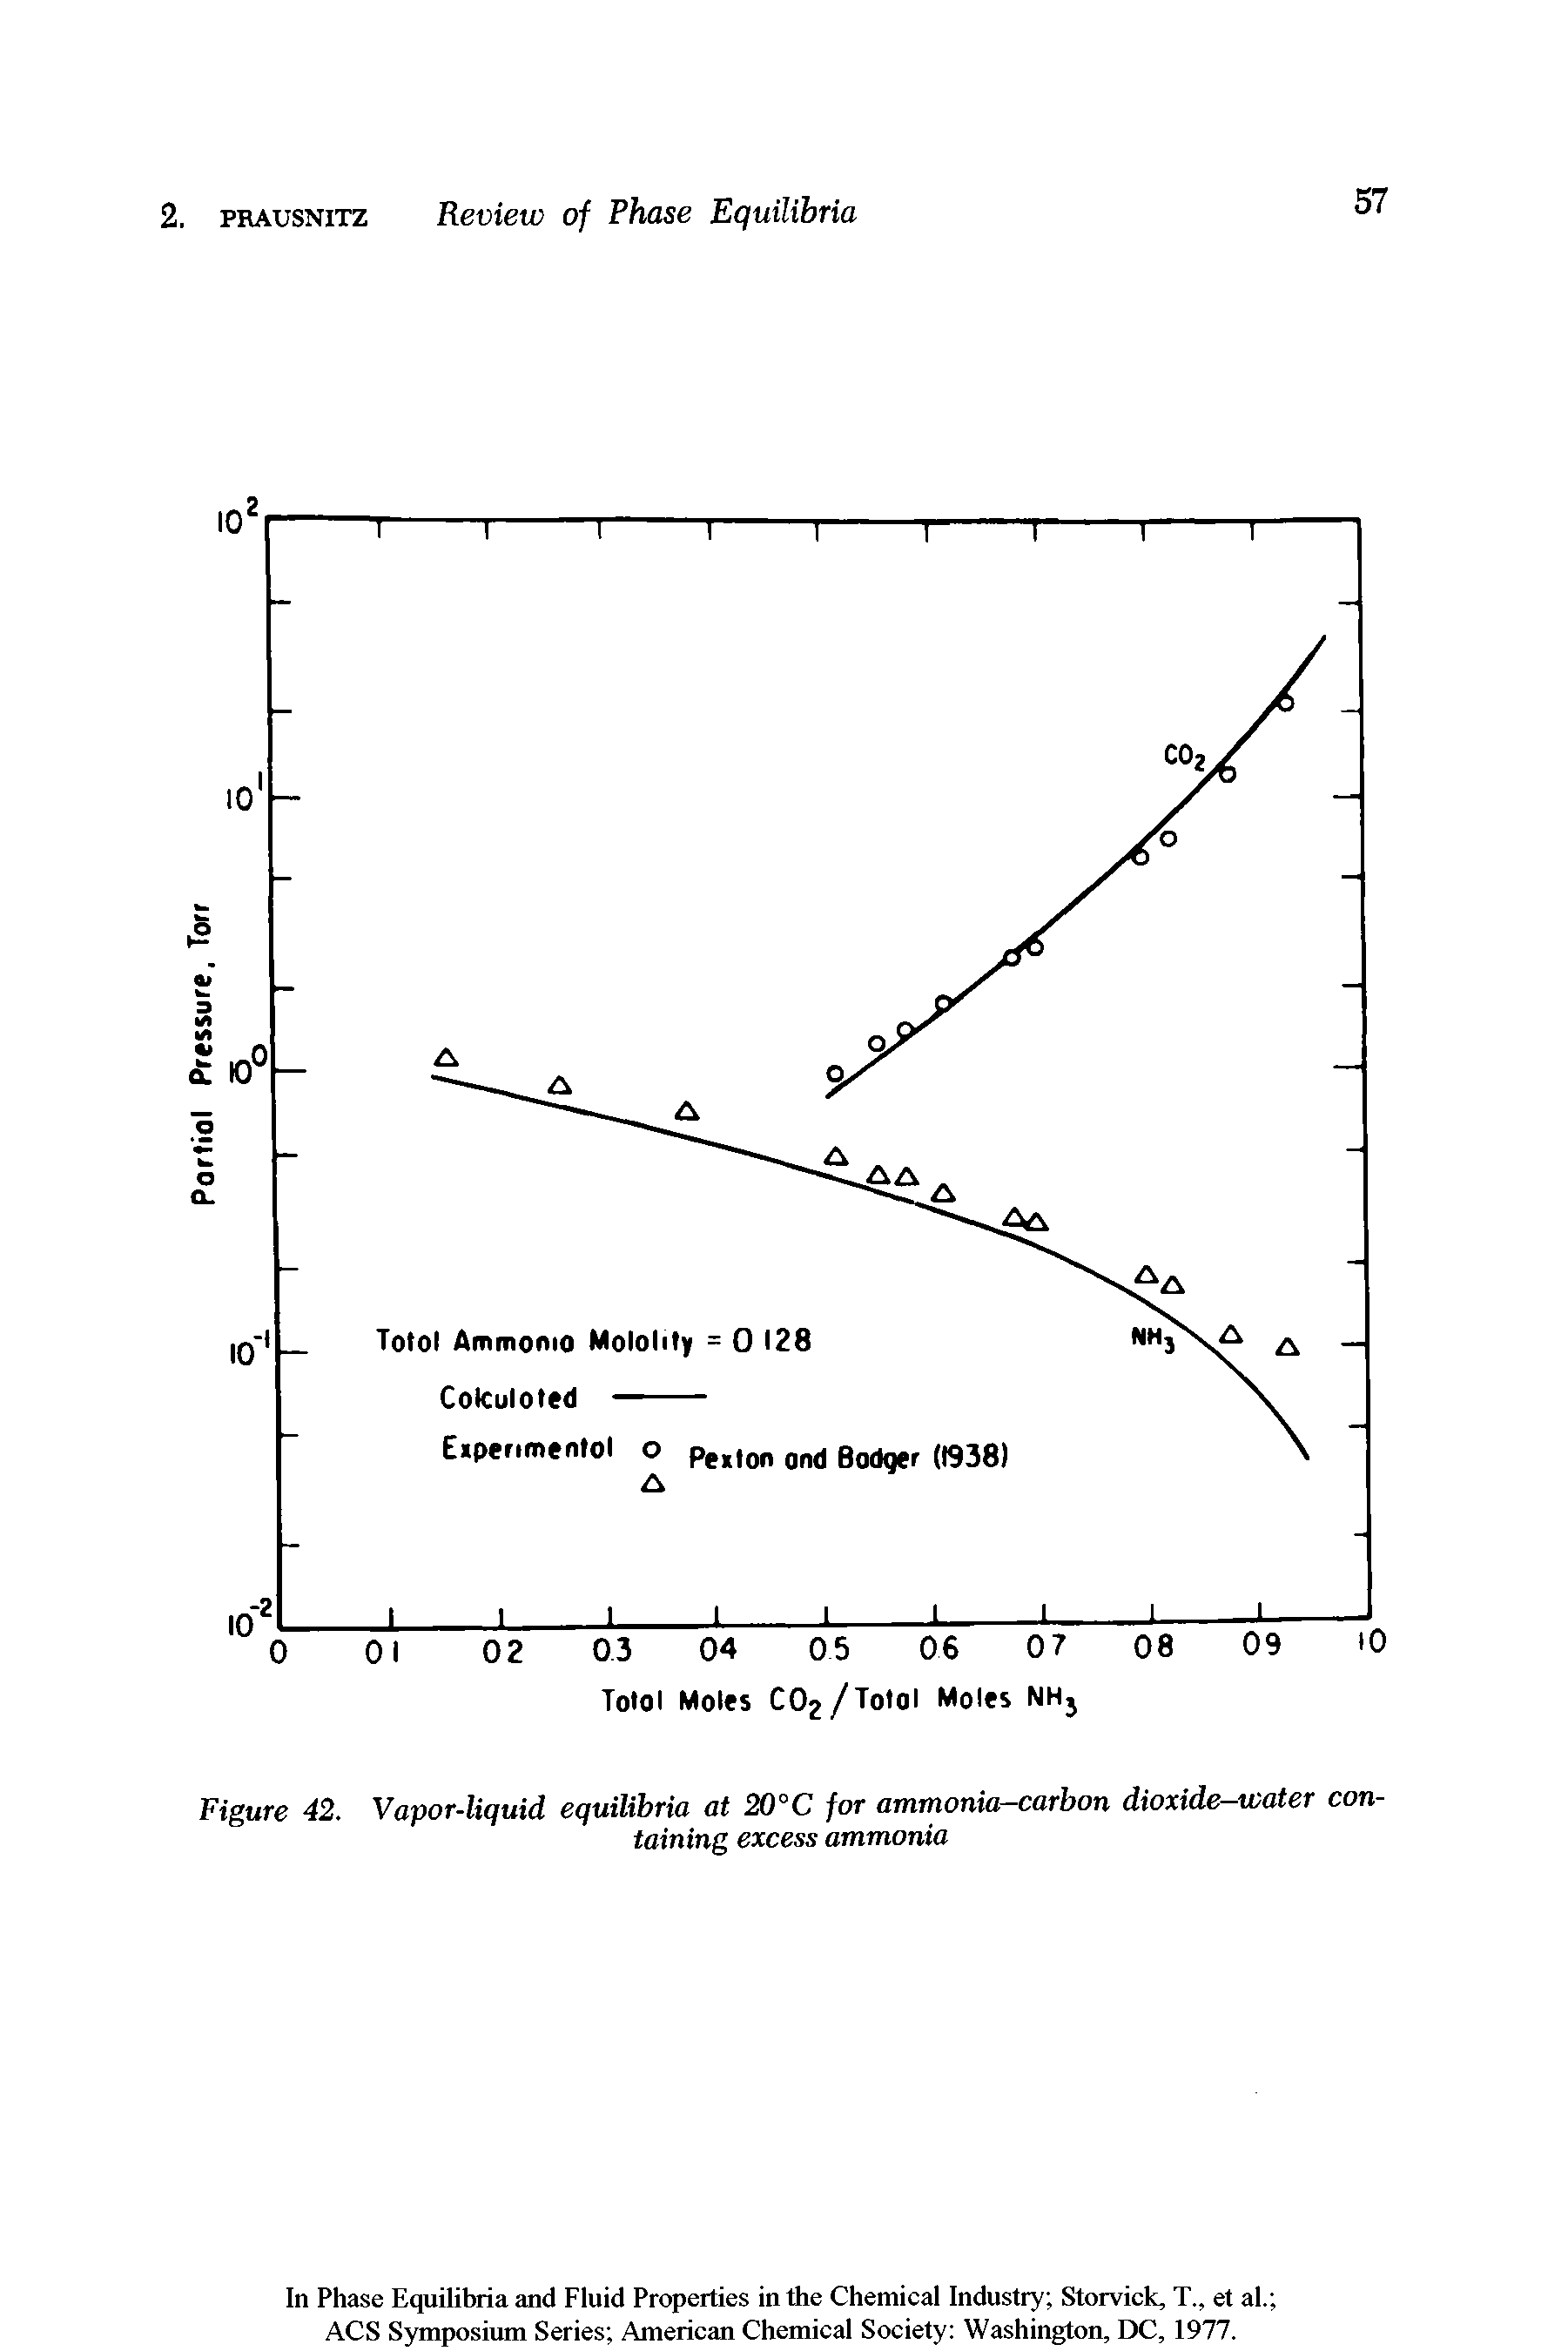 Figure 42. Vapor-liquid equilibria at 20°C for ammonia-carbon dioxide-water containing excess ammonia...